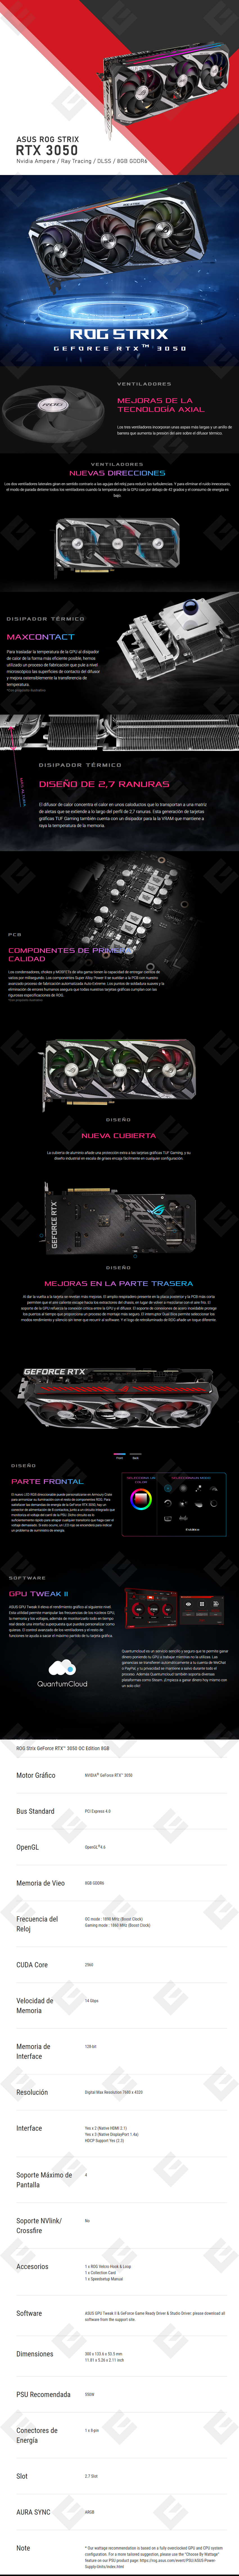 Tarjeta de video Nvidia Asus ROG Strix GeForce RTX 3050 OC Edition 8GB GDDR6, Aura Sync - ROG‑STRIX‑RTX3050‑O8G‑GAMING